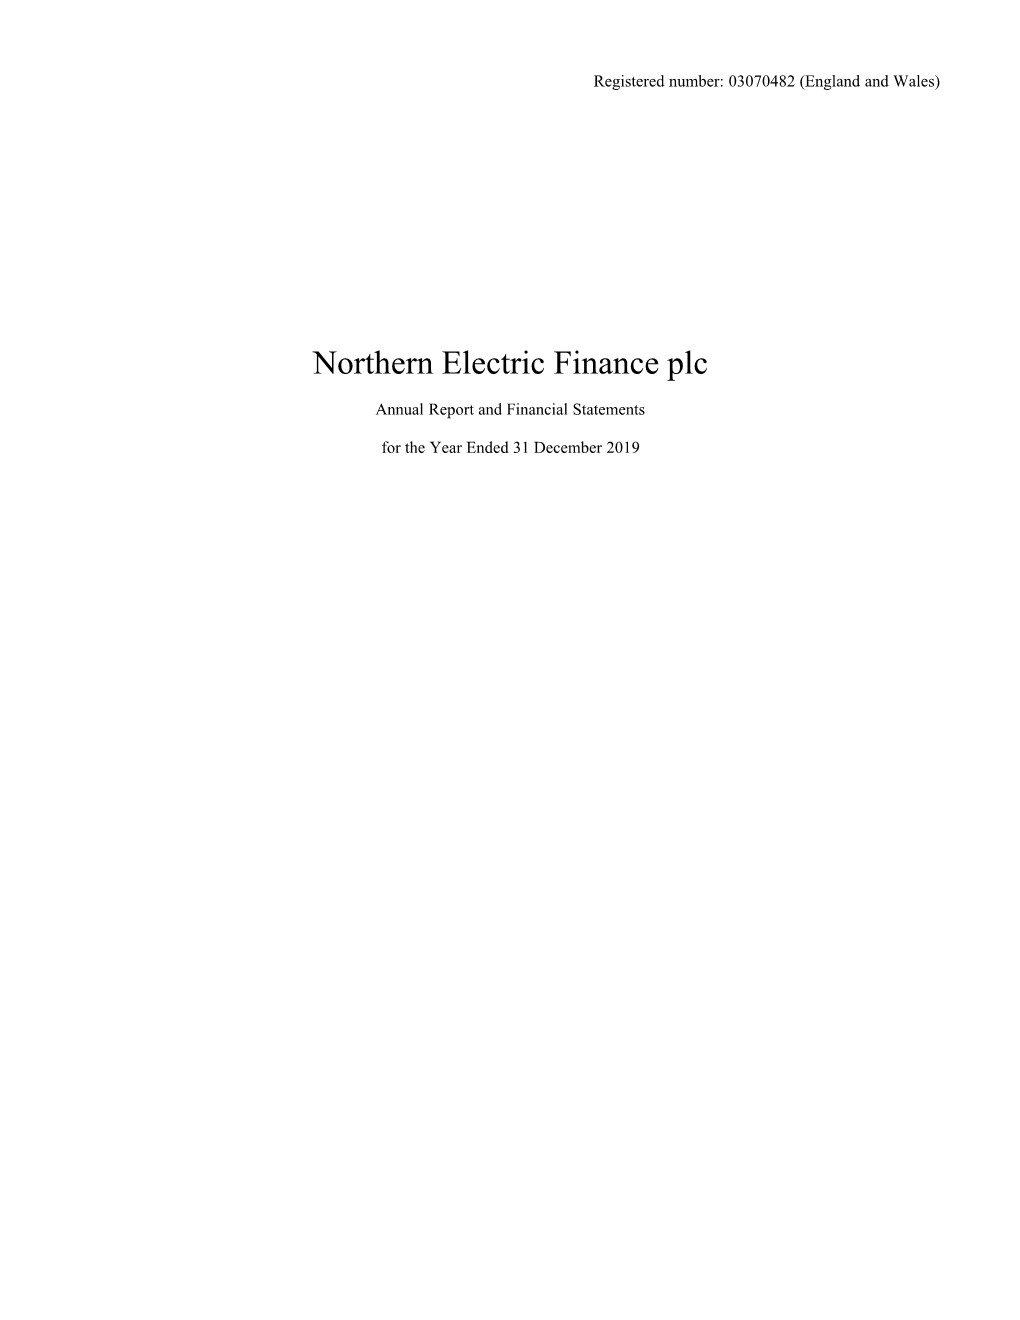 Northern Electric Finance Plc